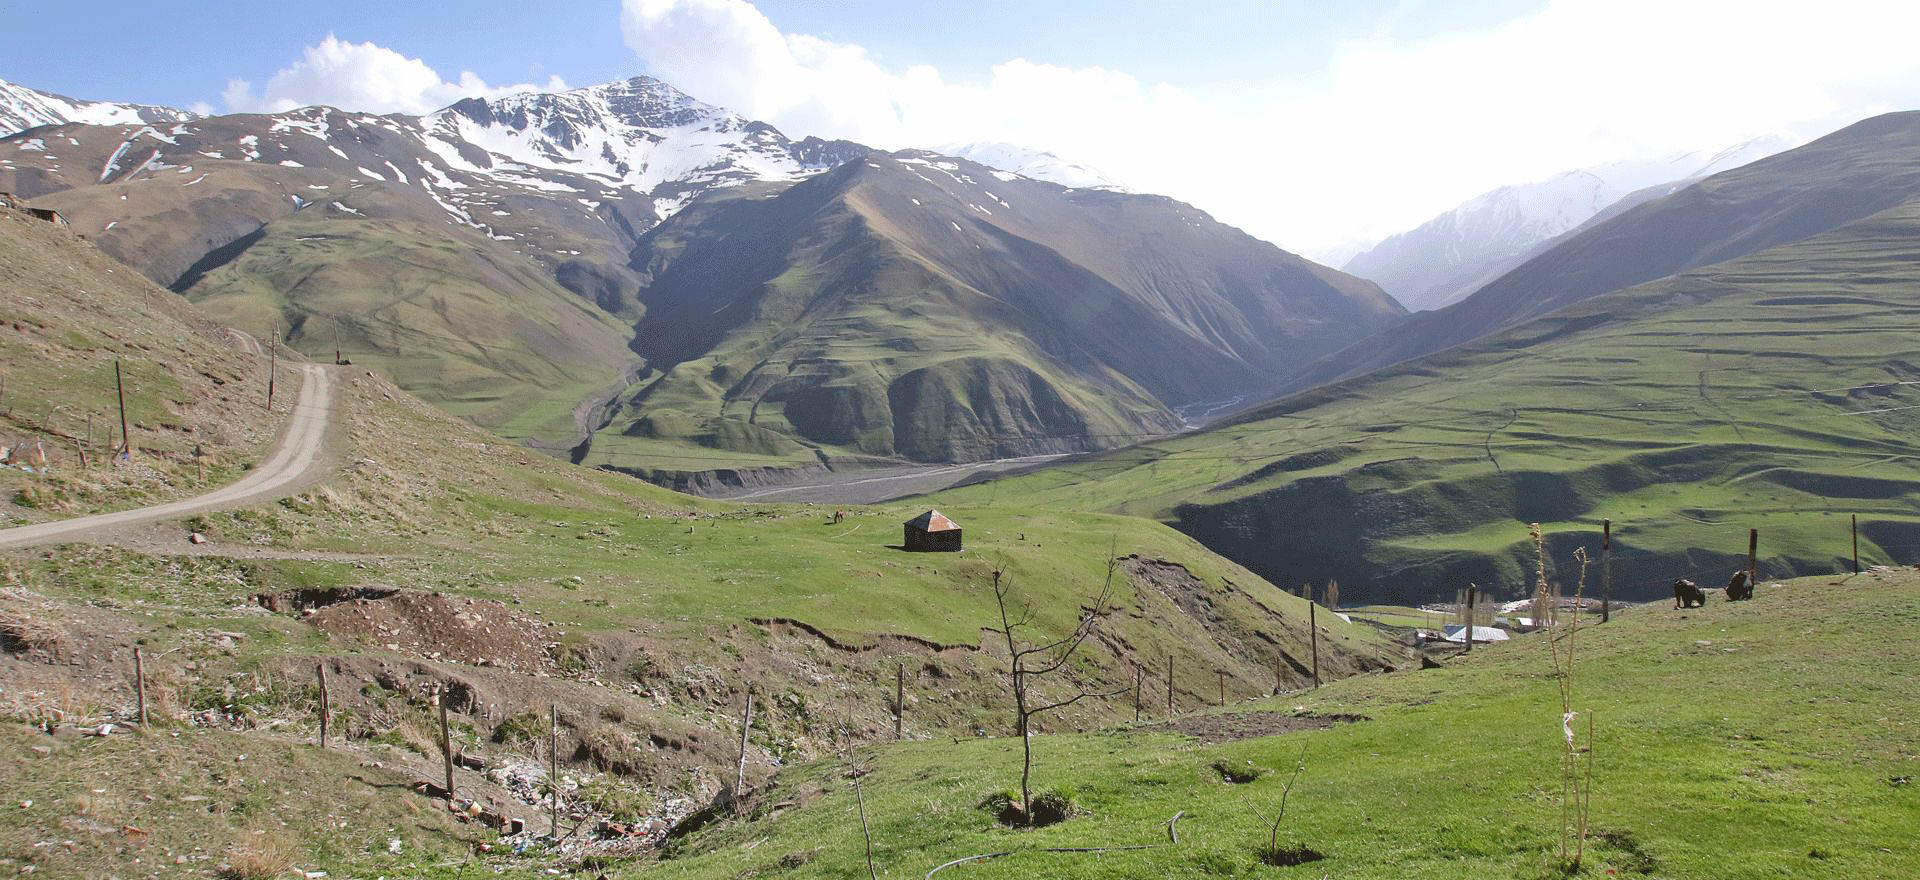 Scenery of the Caucasus Mountains - Azerbaijan Holidays and Tours